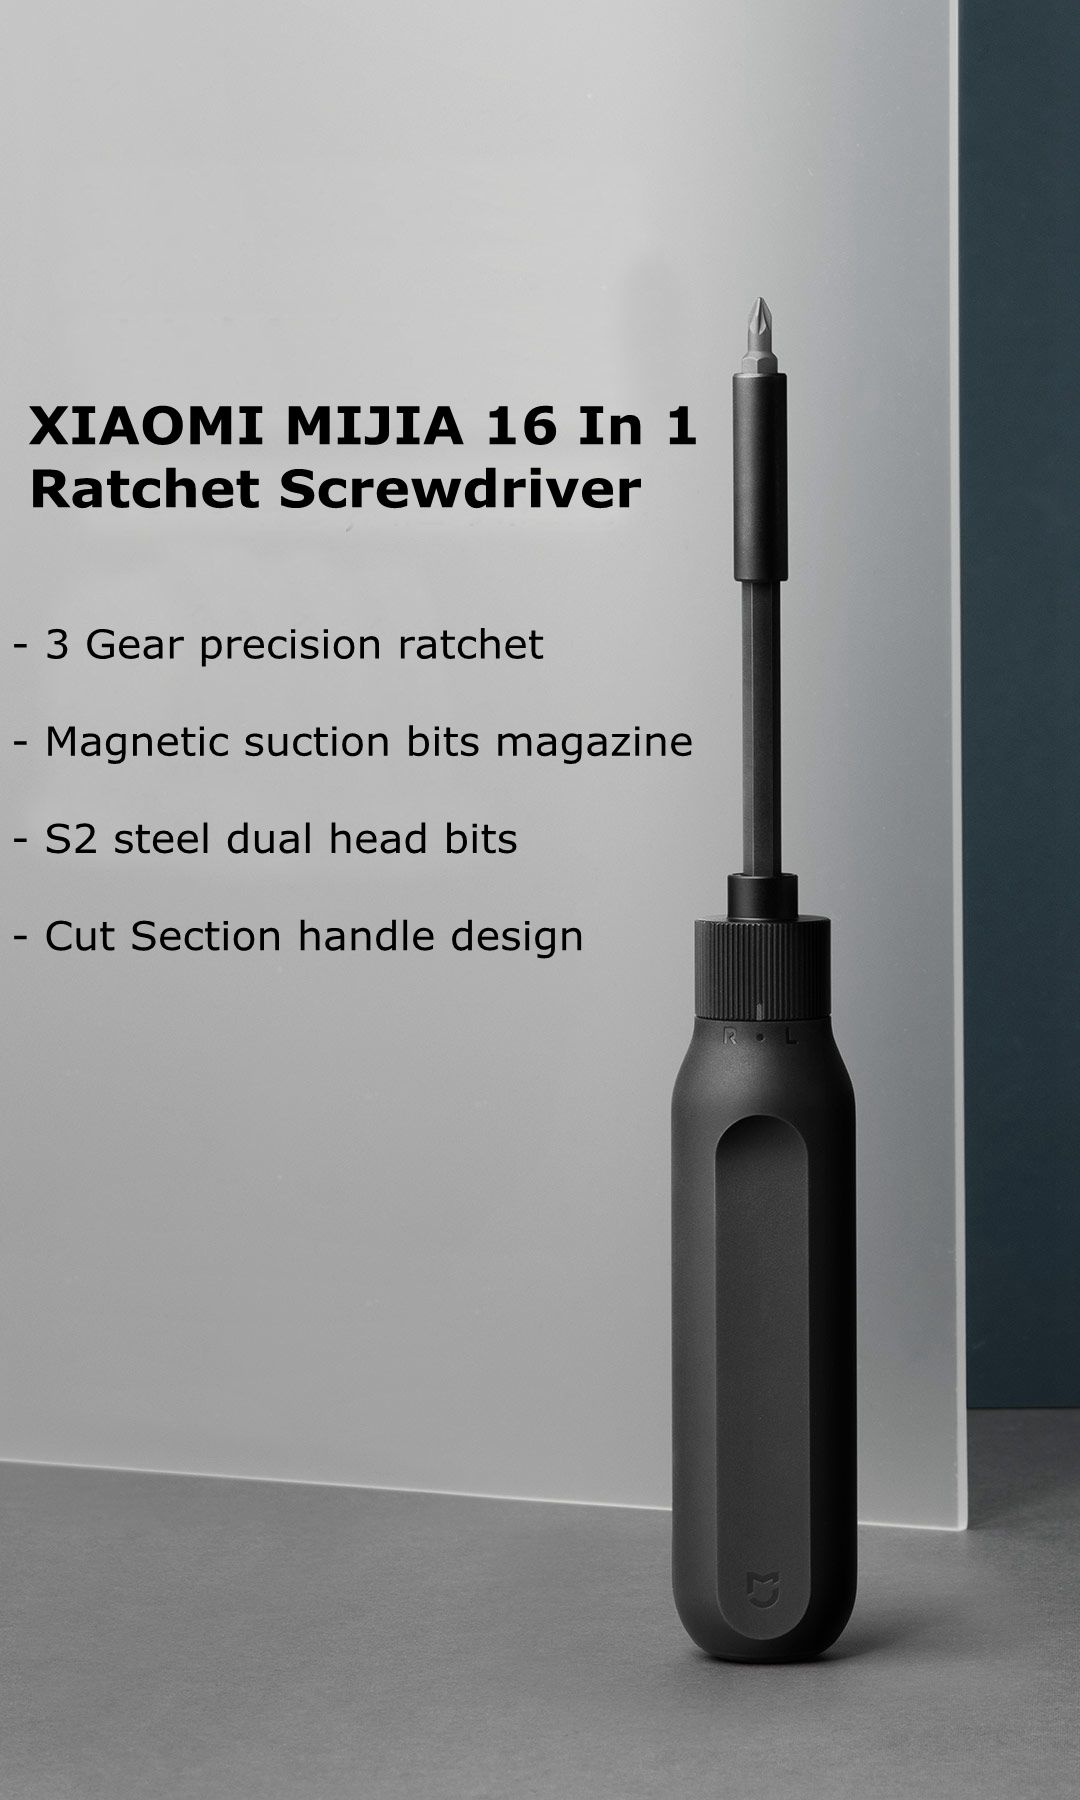 XIAOMI-MIJIA-16-In-1-S2-Ratchet-Screwdriver-Magazine-Design-20Nm-Dual-Head-Screw-Driver-Repair-Tool-1680673